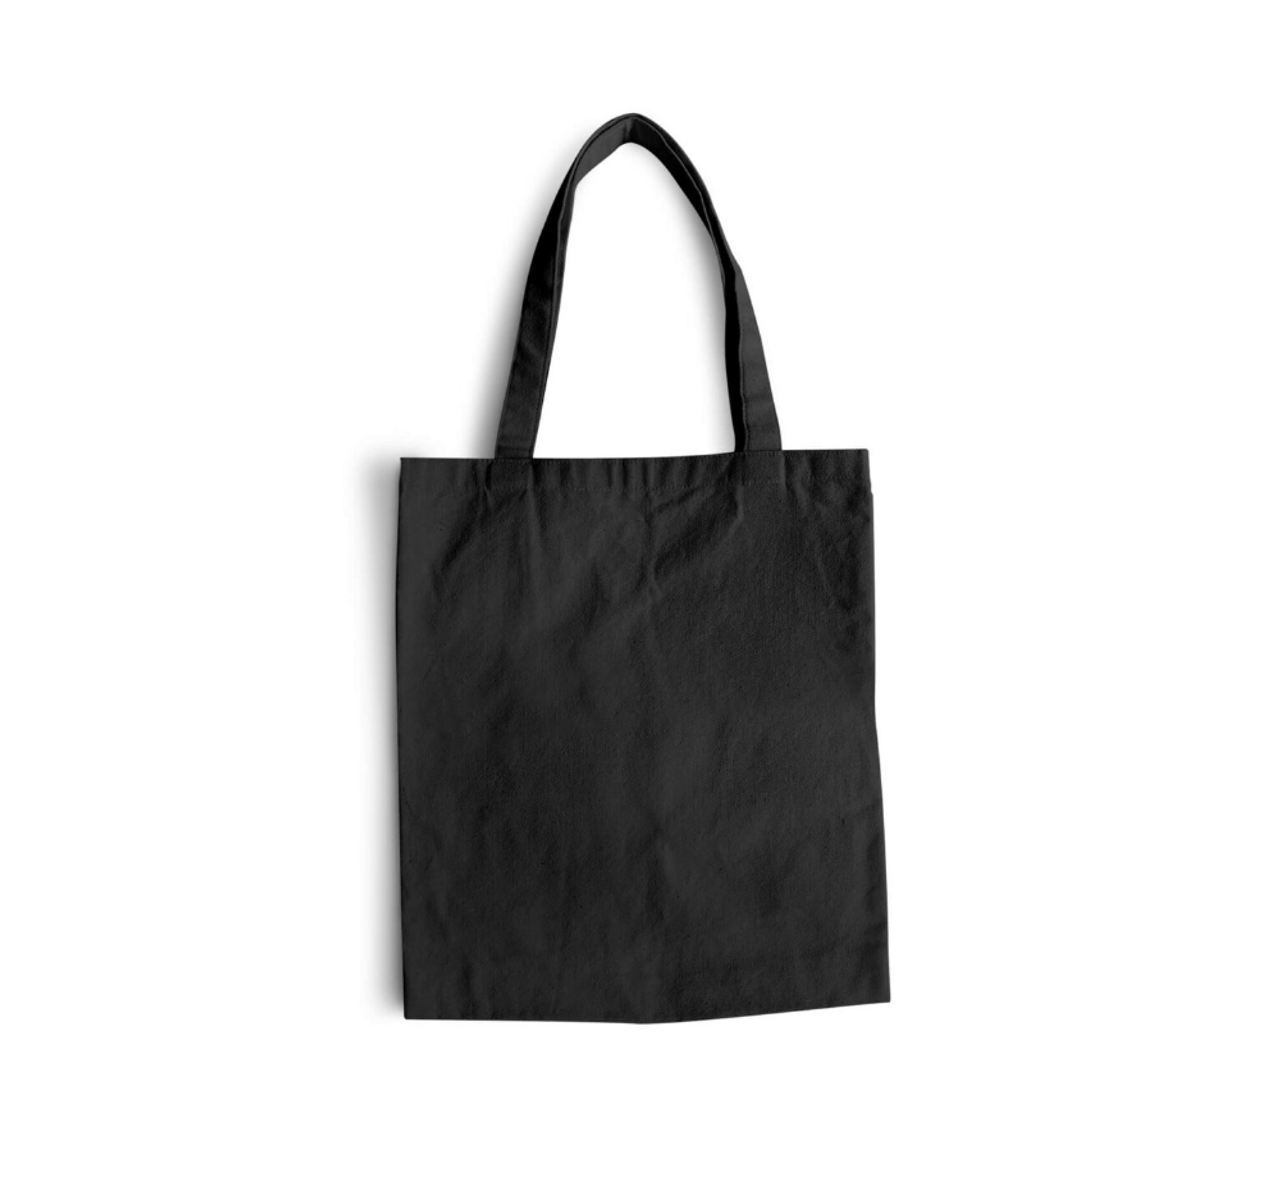 Reli. T-Shirt Bags, Plain Black (300 Count) | Bulk Shopping Bags